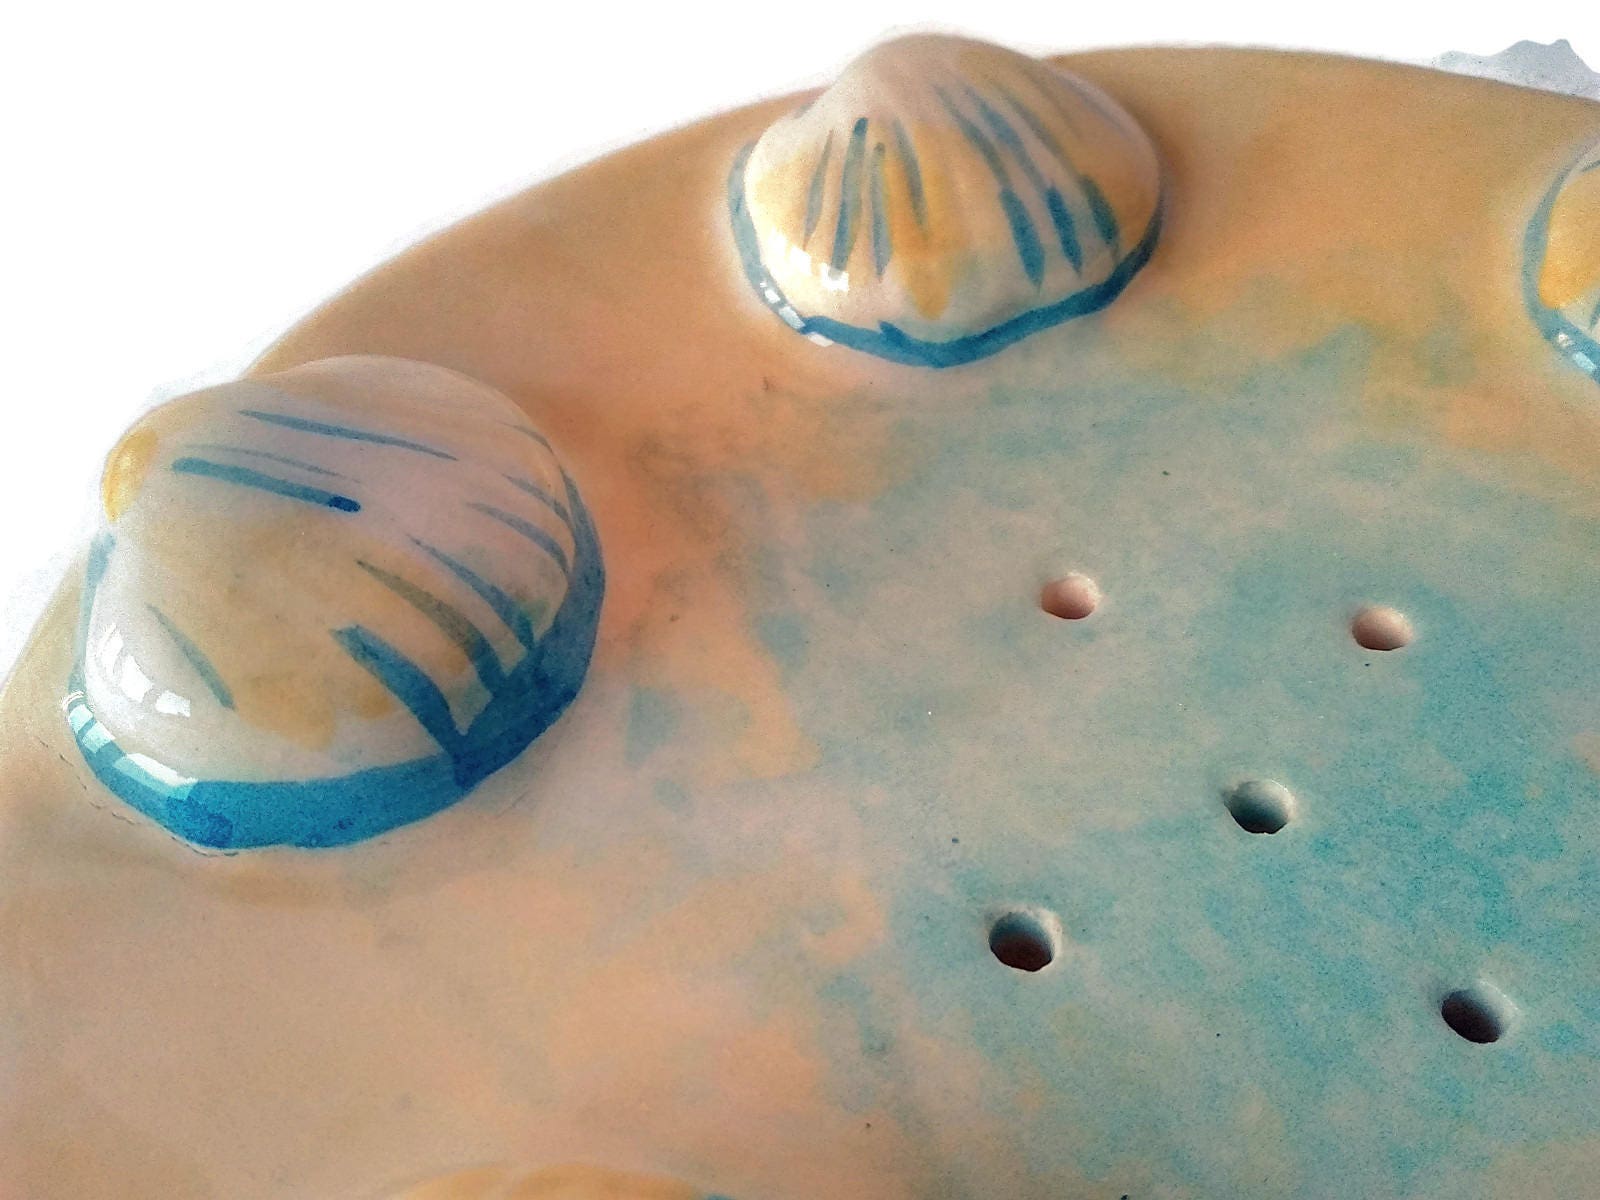 Seashell Draining Ceramic Soap Dish With Drain Holes, Zero Waste Bathroom Accessories, Clay Soap Saver, Soap Bar Holder - Ceramica Ana Rafael